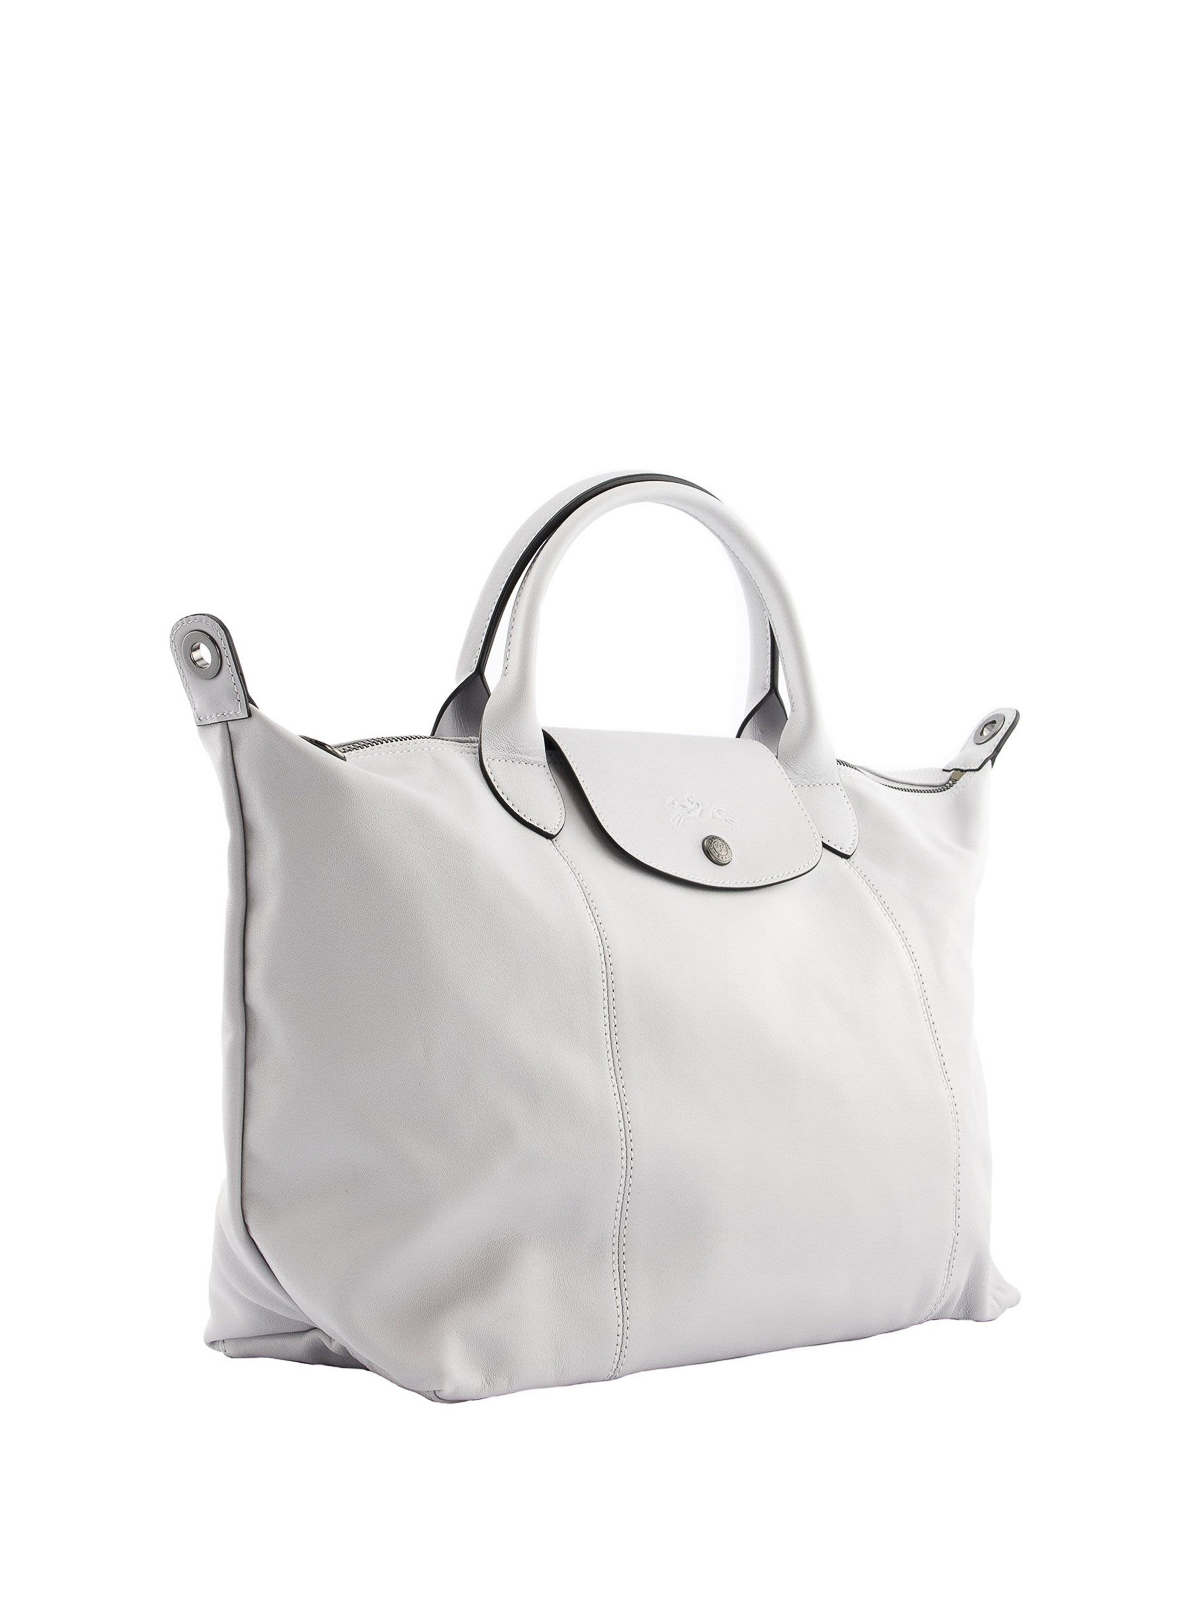 Longchamp Medium Le Pliage Cuir Leather Top Handle Bag